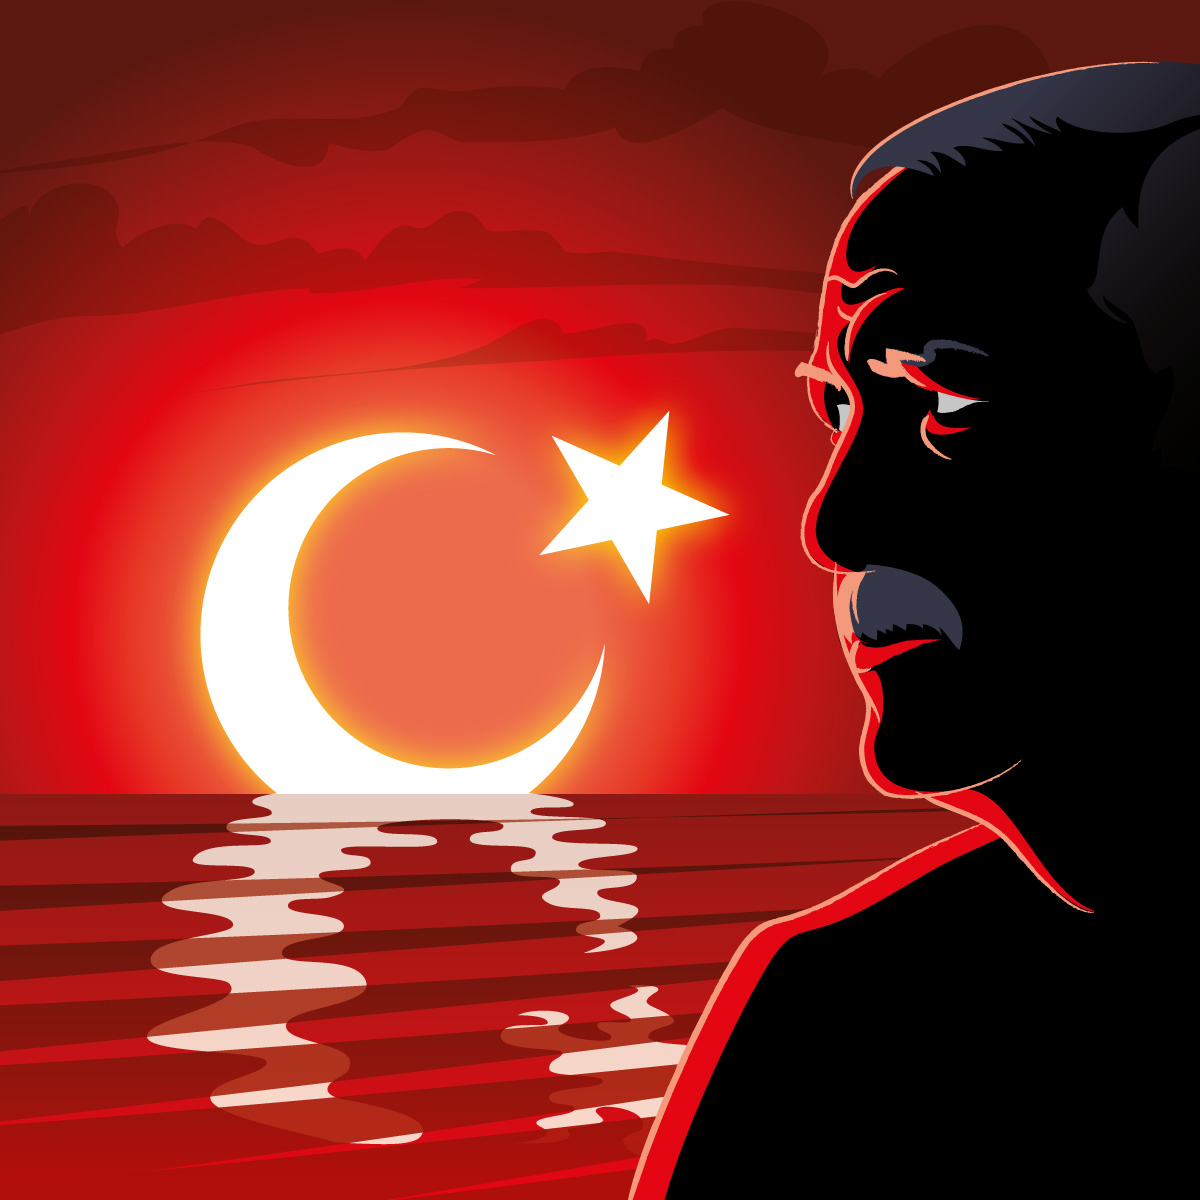 Turkish moonset - Recep Tayyip Erdogan illusration